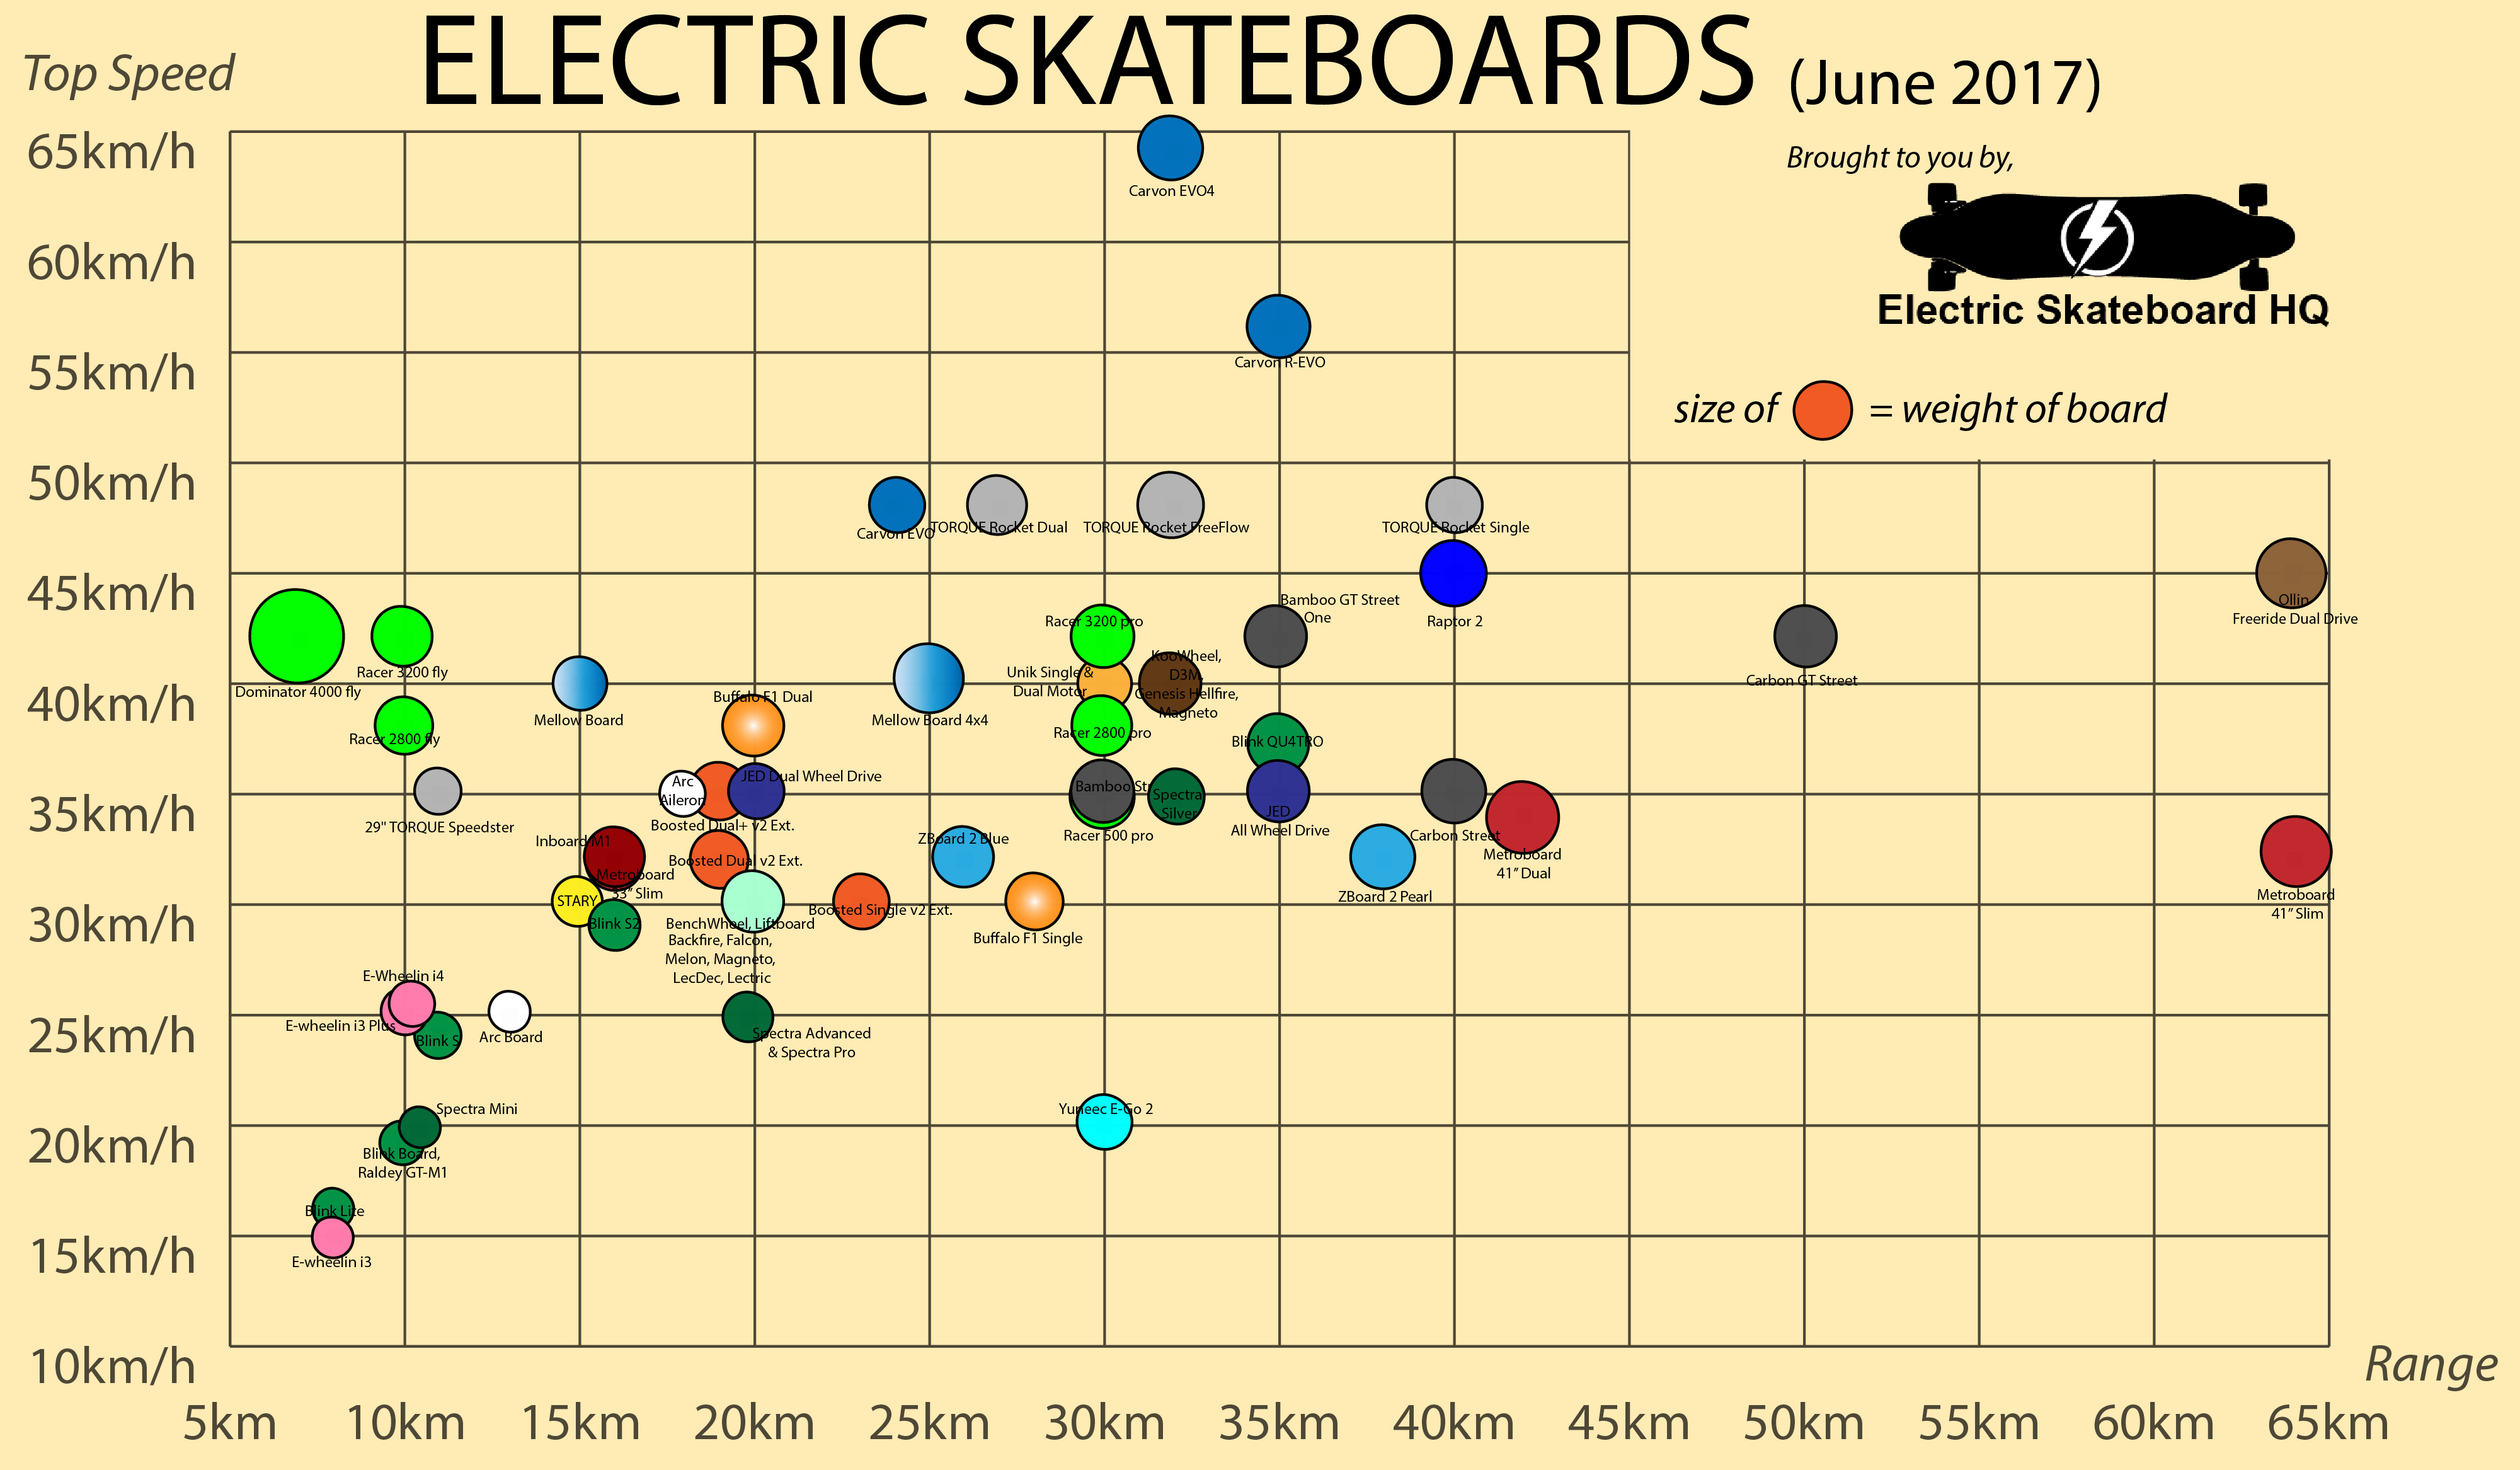 Electric Skateboard Comparison Chart (June 2017)